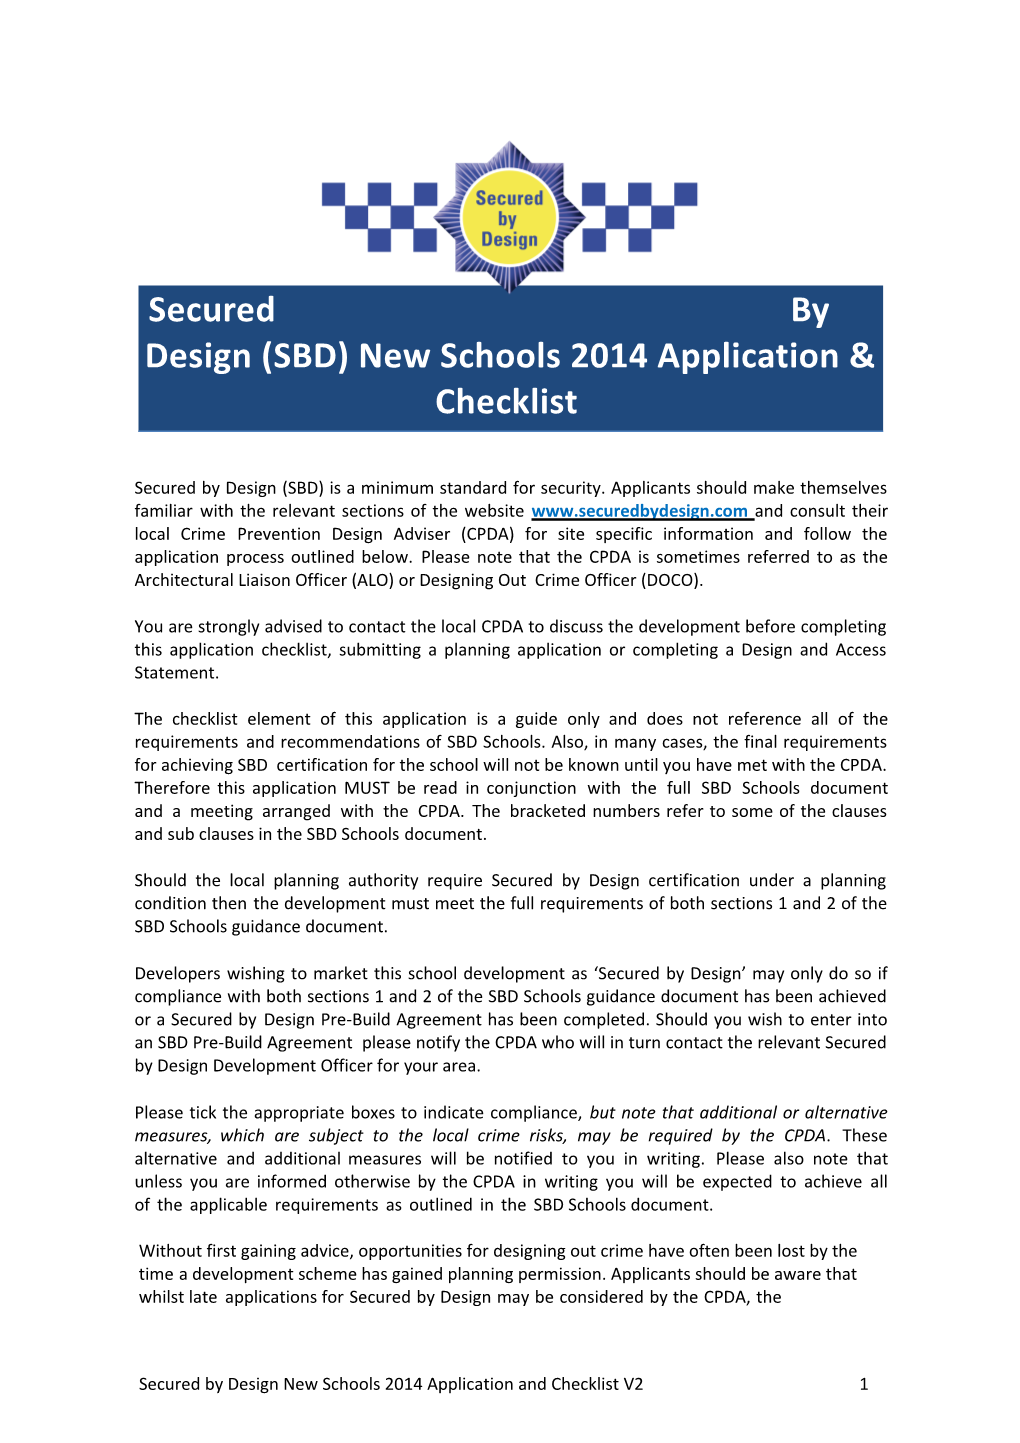 Secured by Design (SBD) New Schools 2014 Application & Checklist